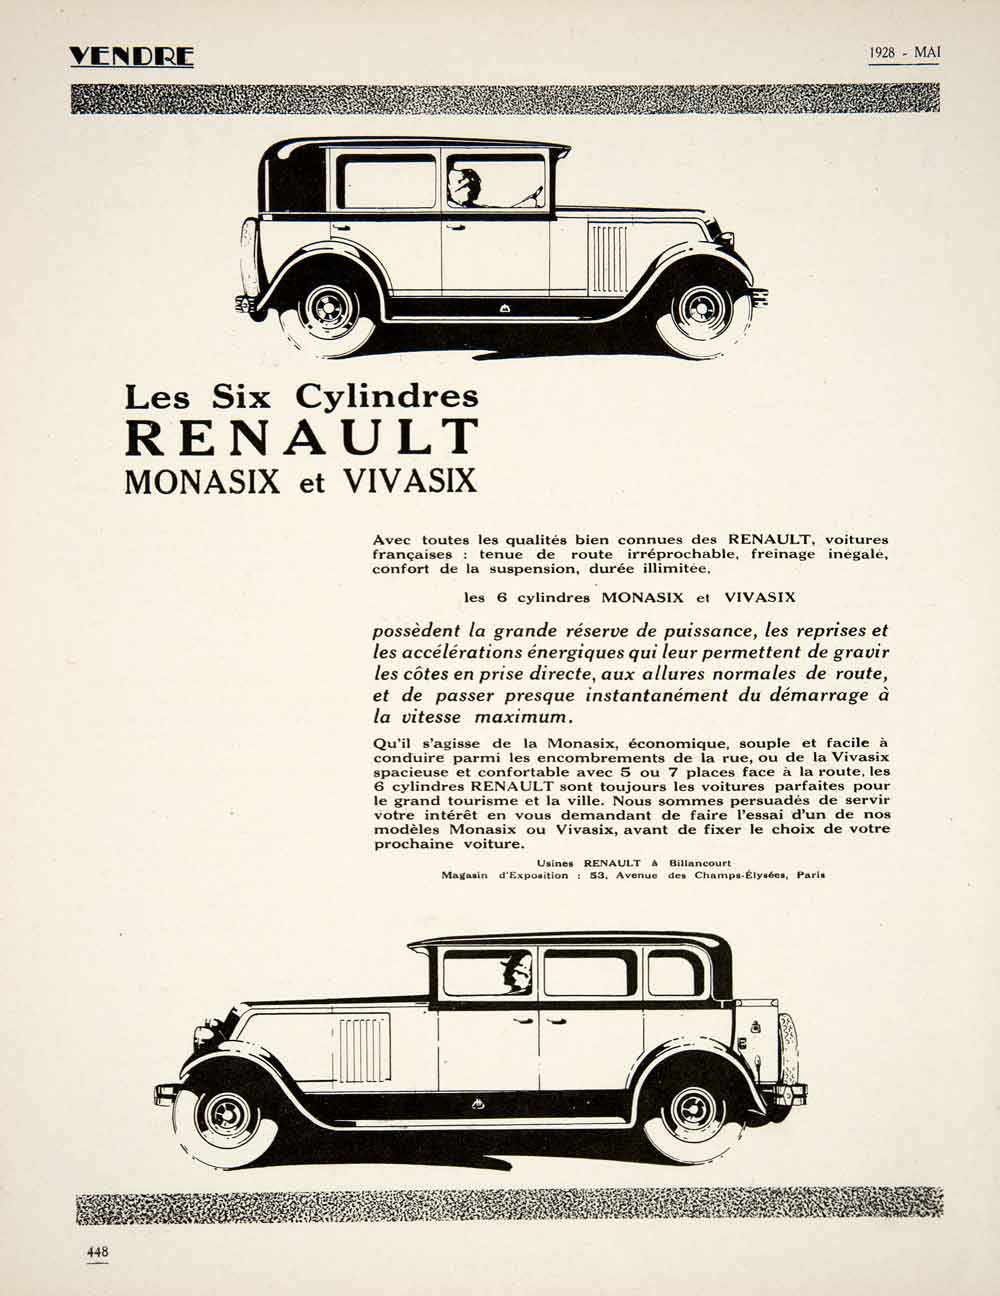 1928 Ad French Renault Automobile Monasix Vivasix Antique Car 6 Cylinder VEN5